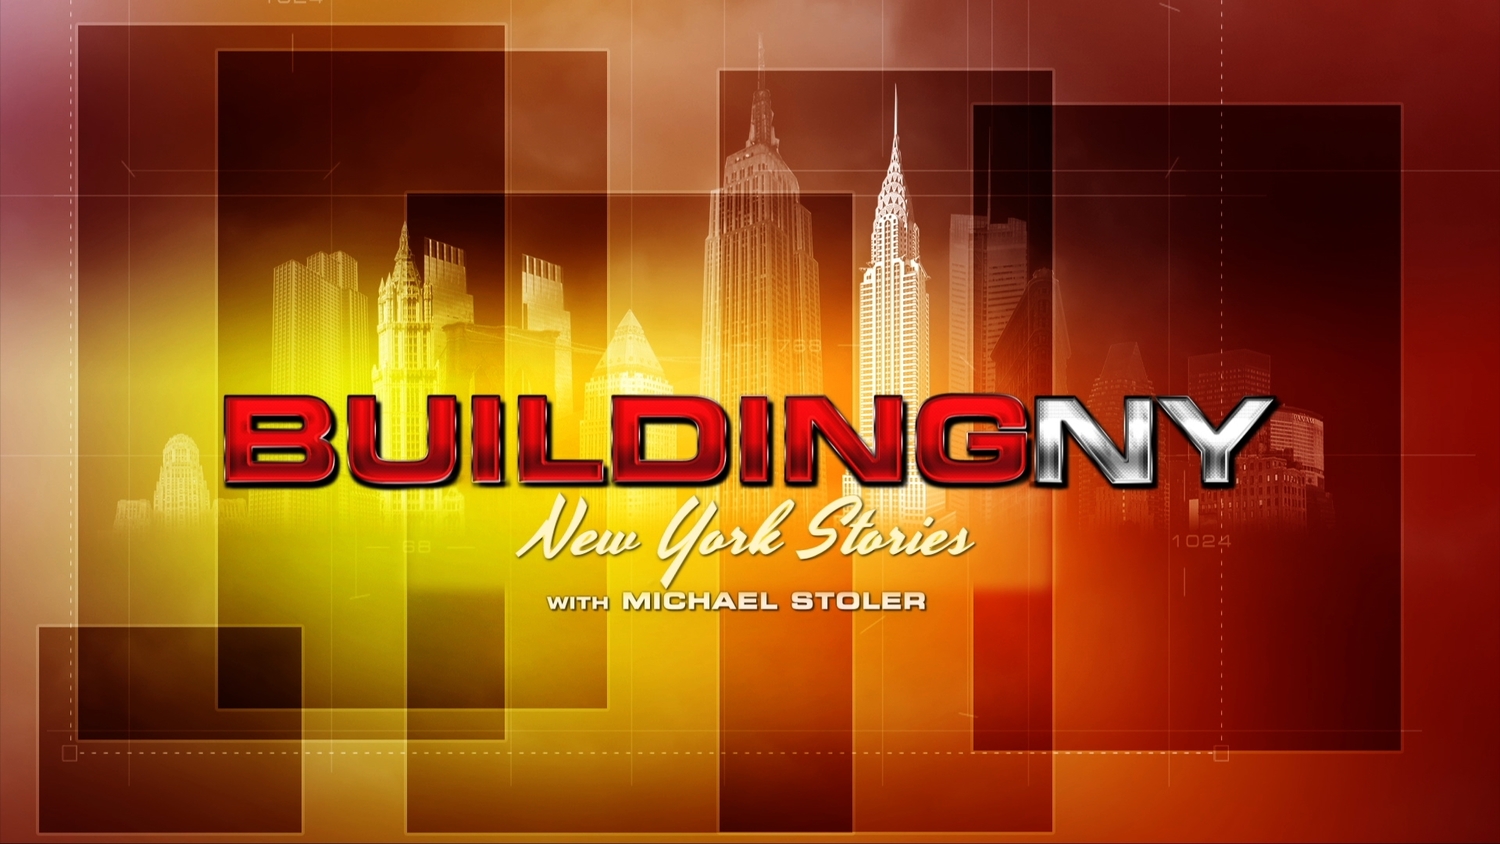 Building New York-New York Life Stories